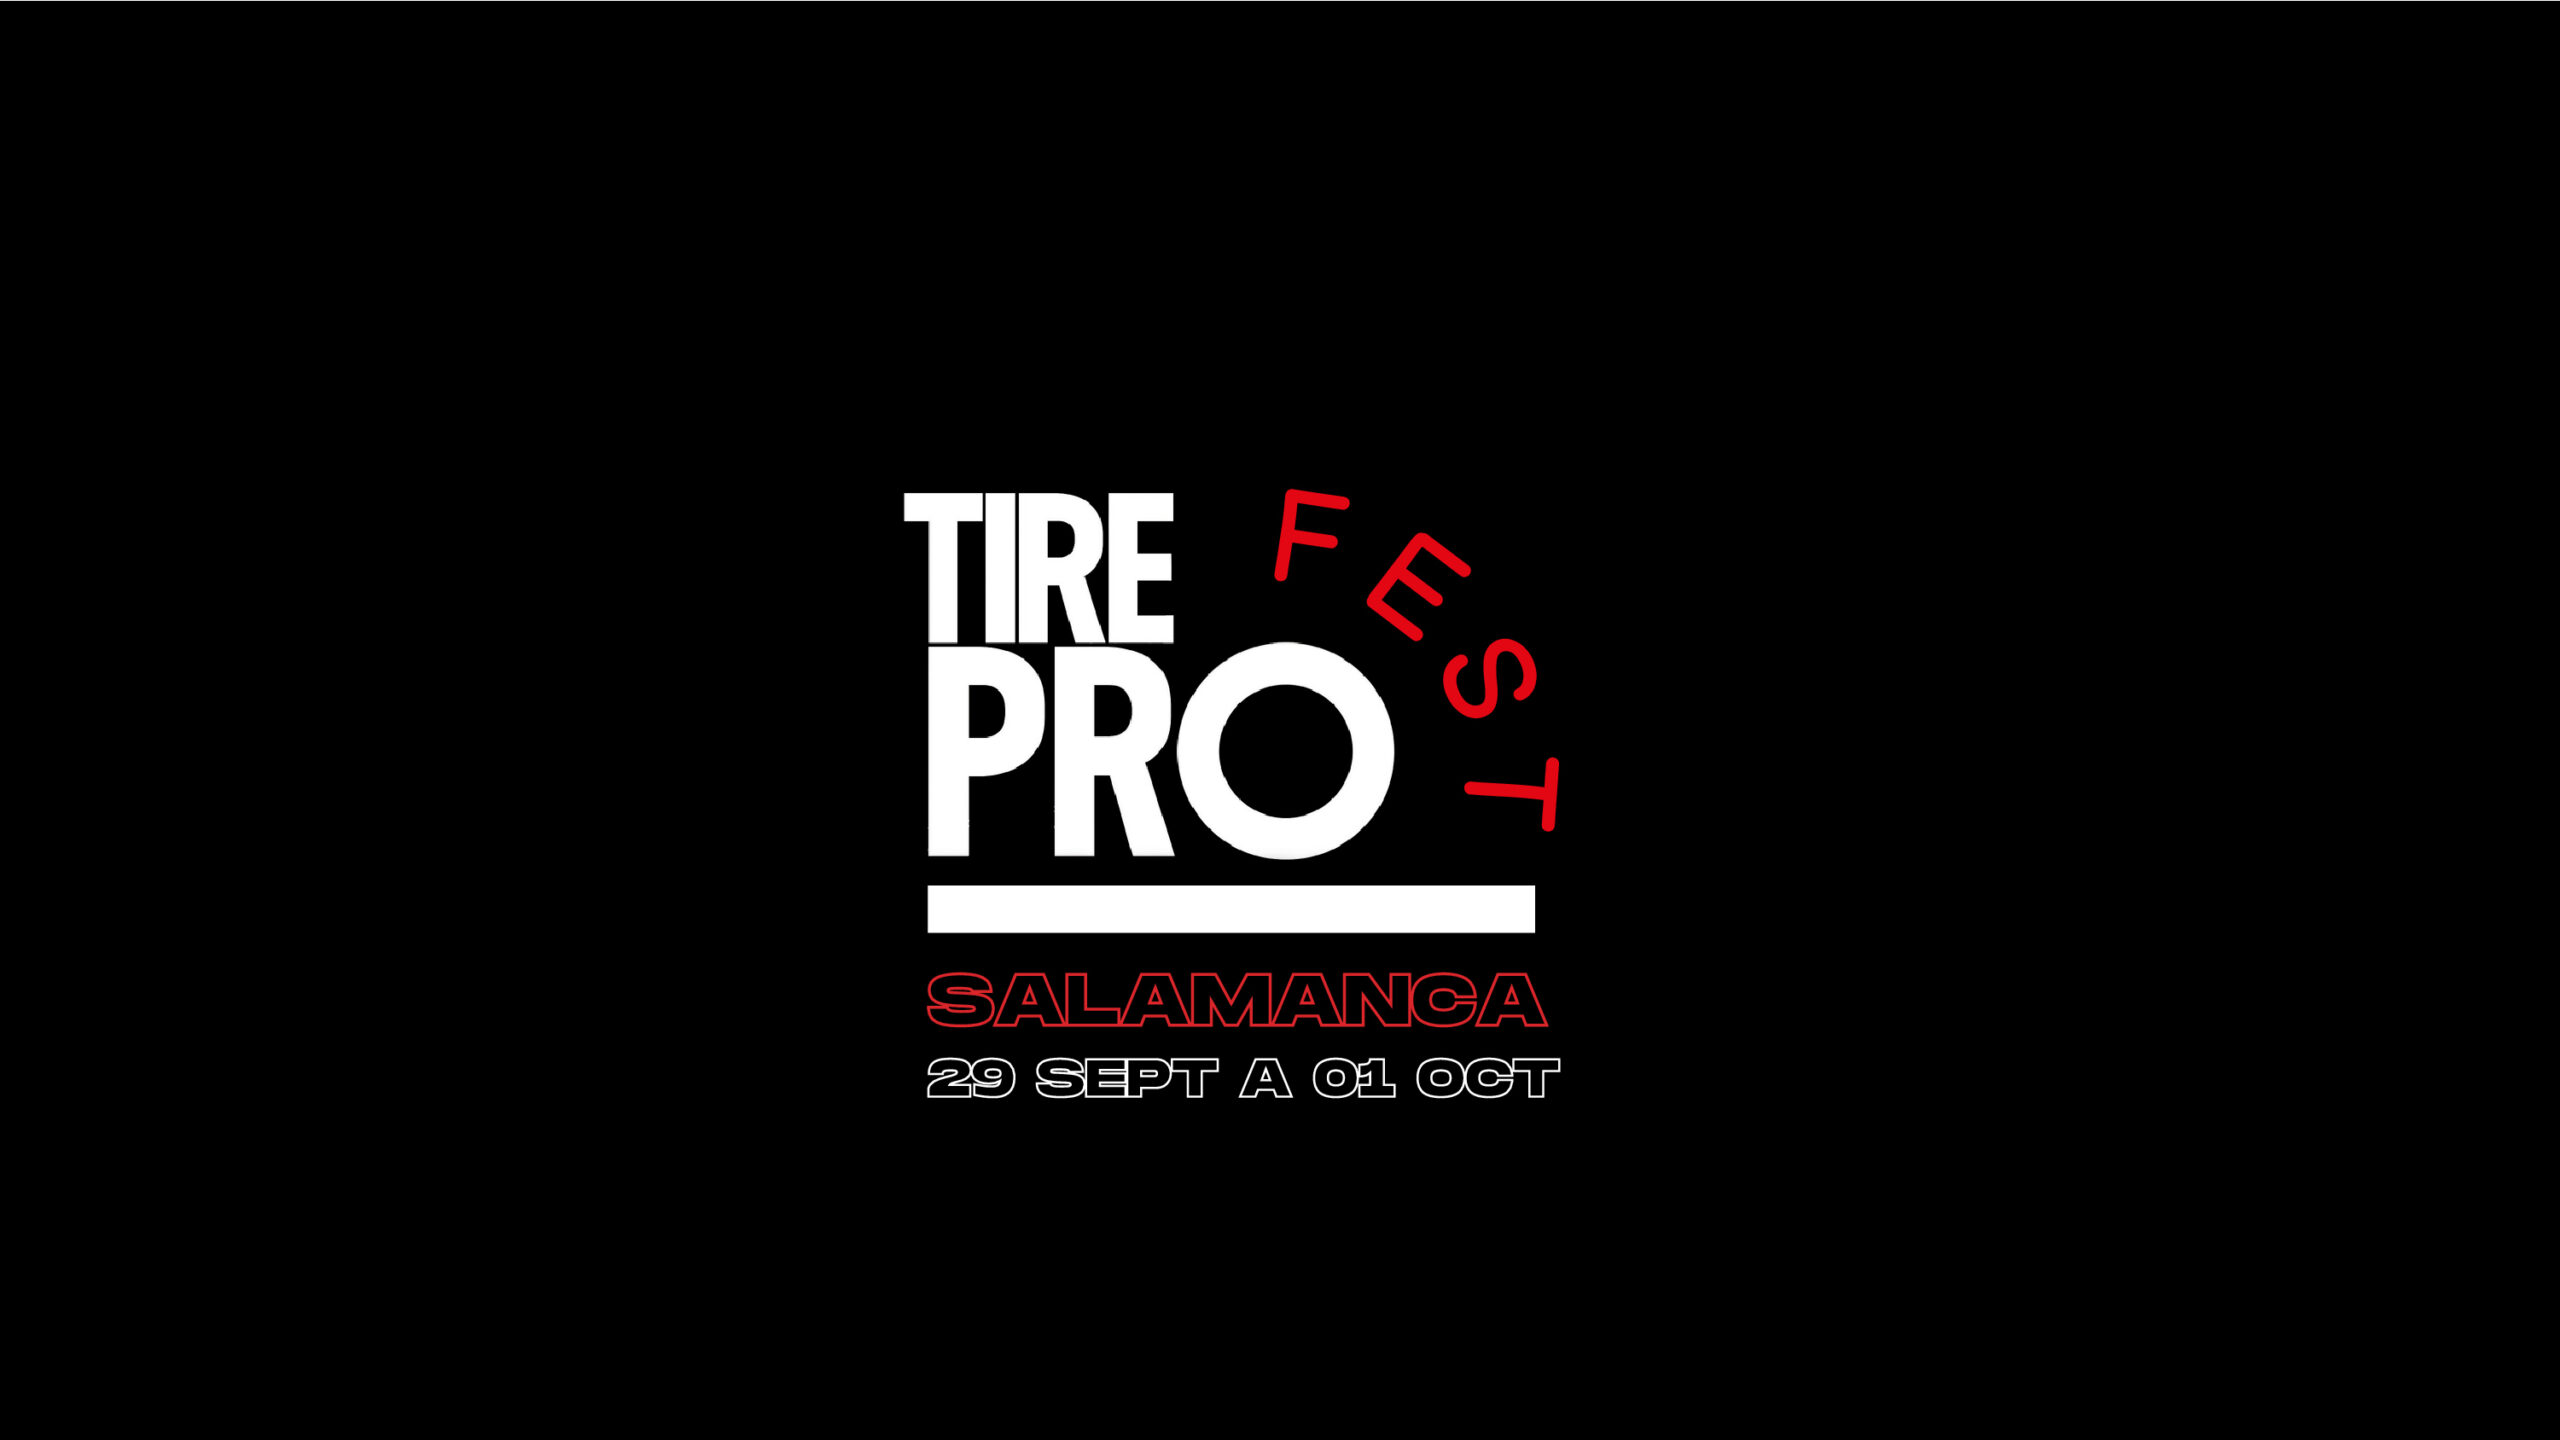 TireProFest